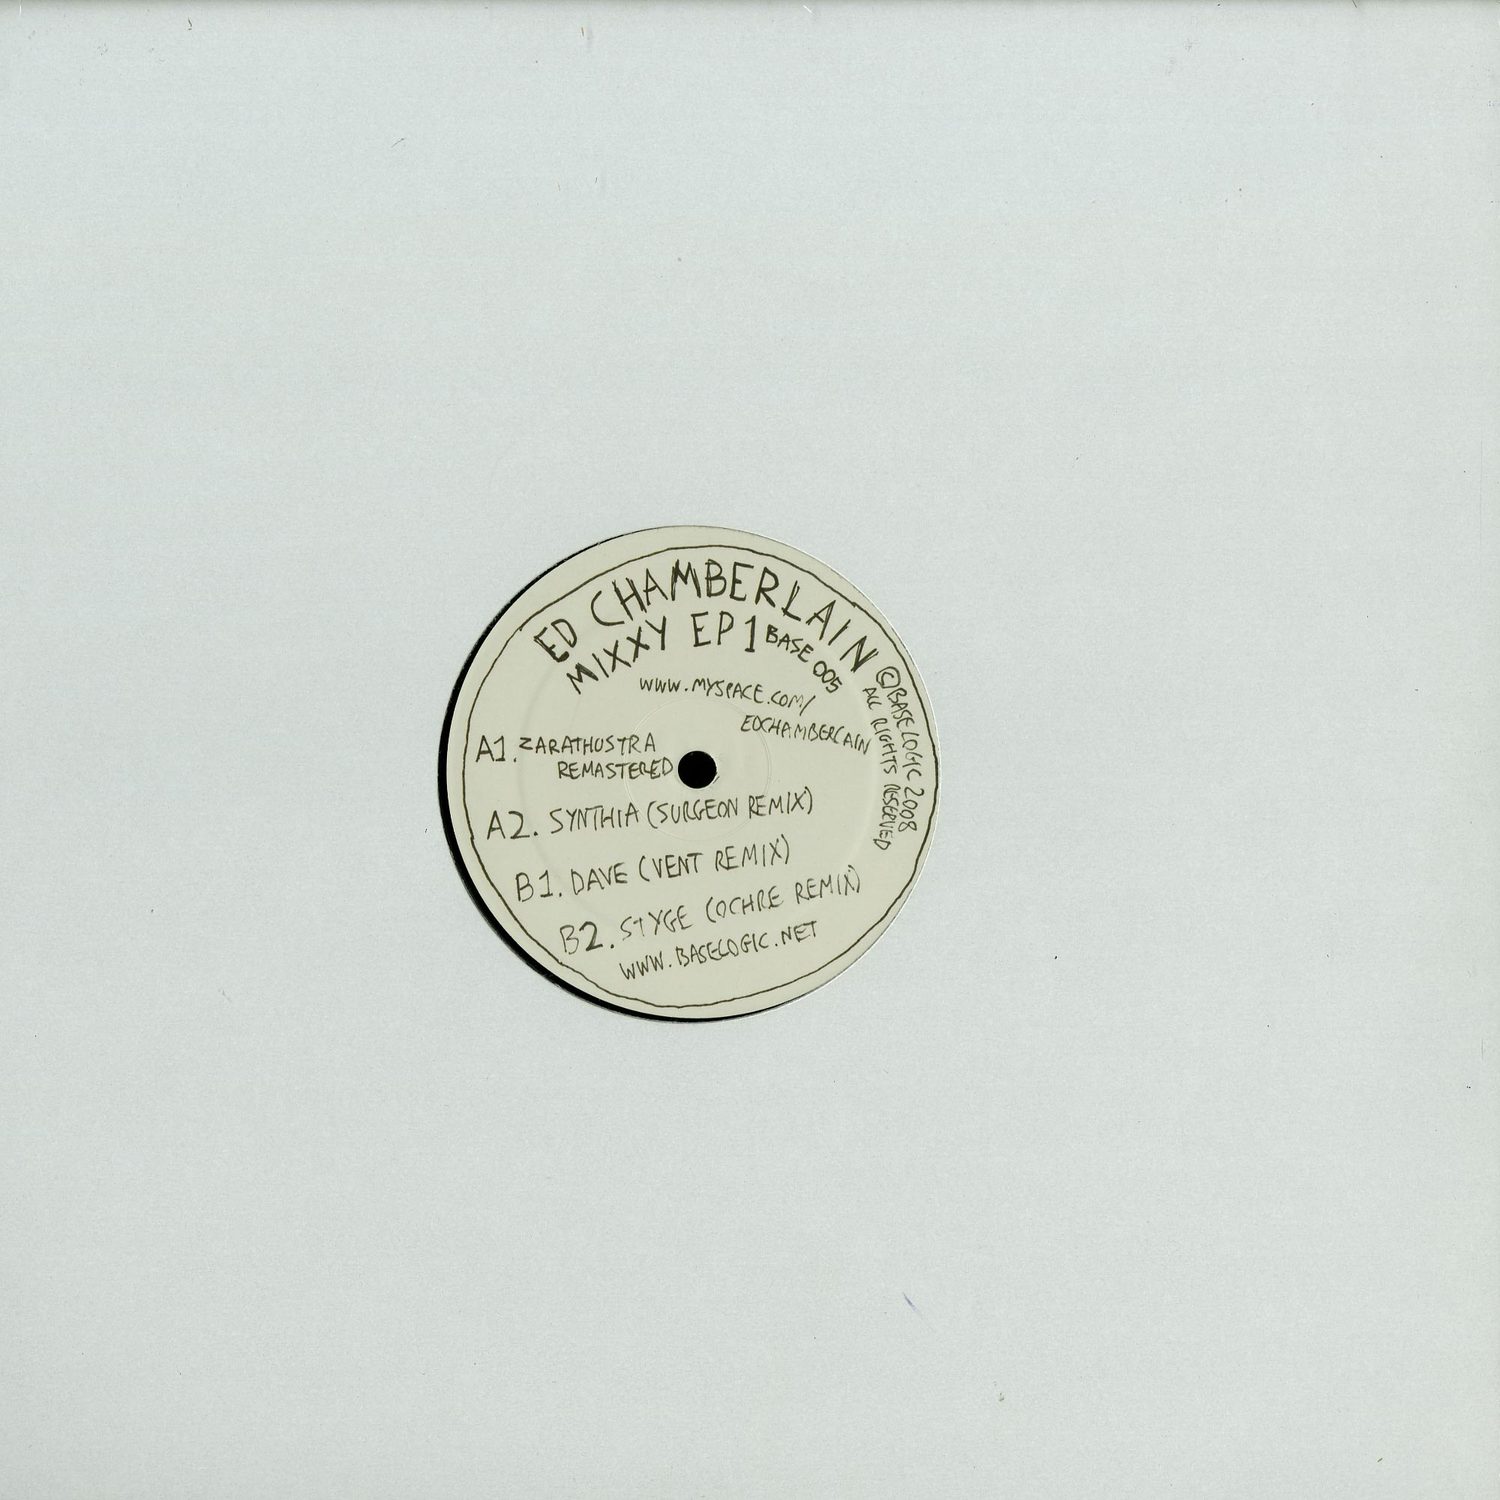 Ed Chamberlain - MIXXY EP 1/ SURGEON RMX